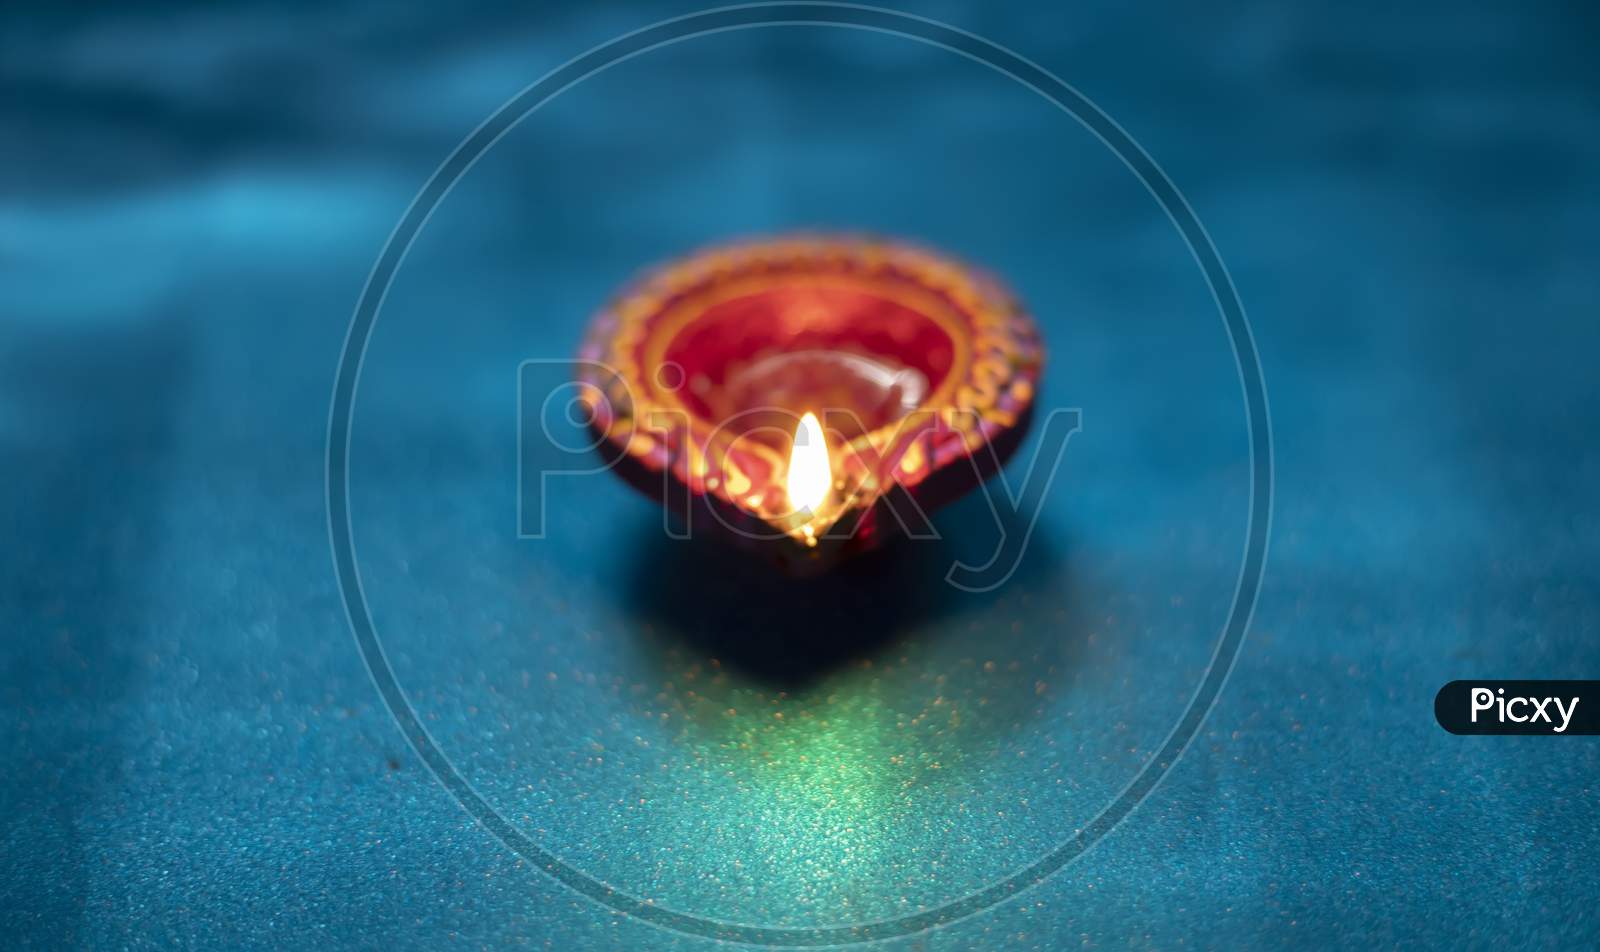 Colorful Clay Diya Lamps Lit During Diwali Celebration, Selective Focus